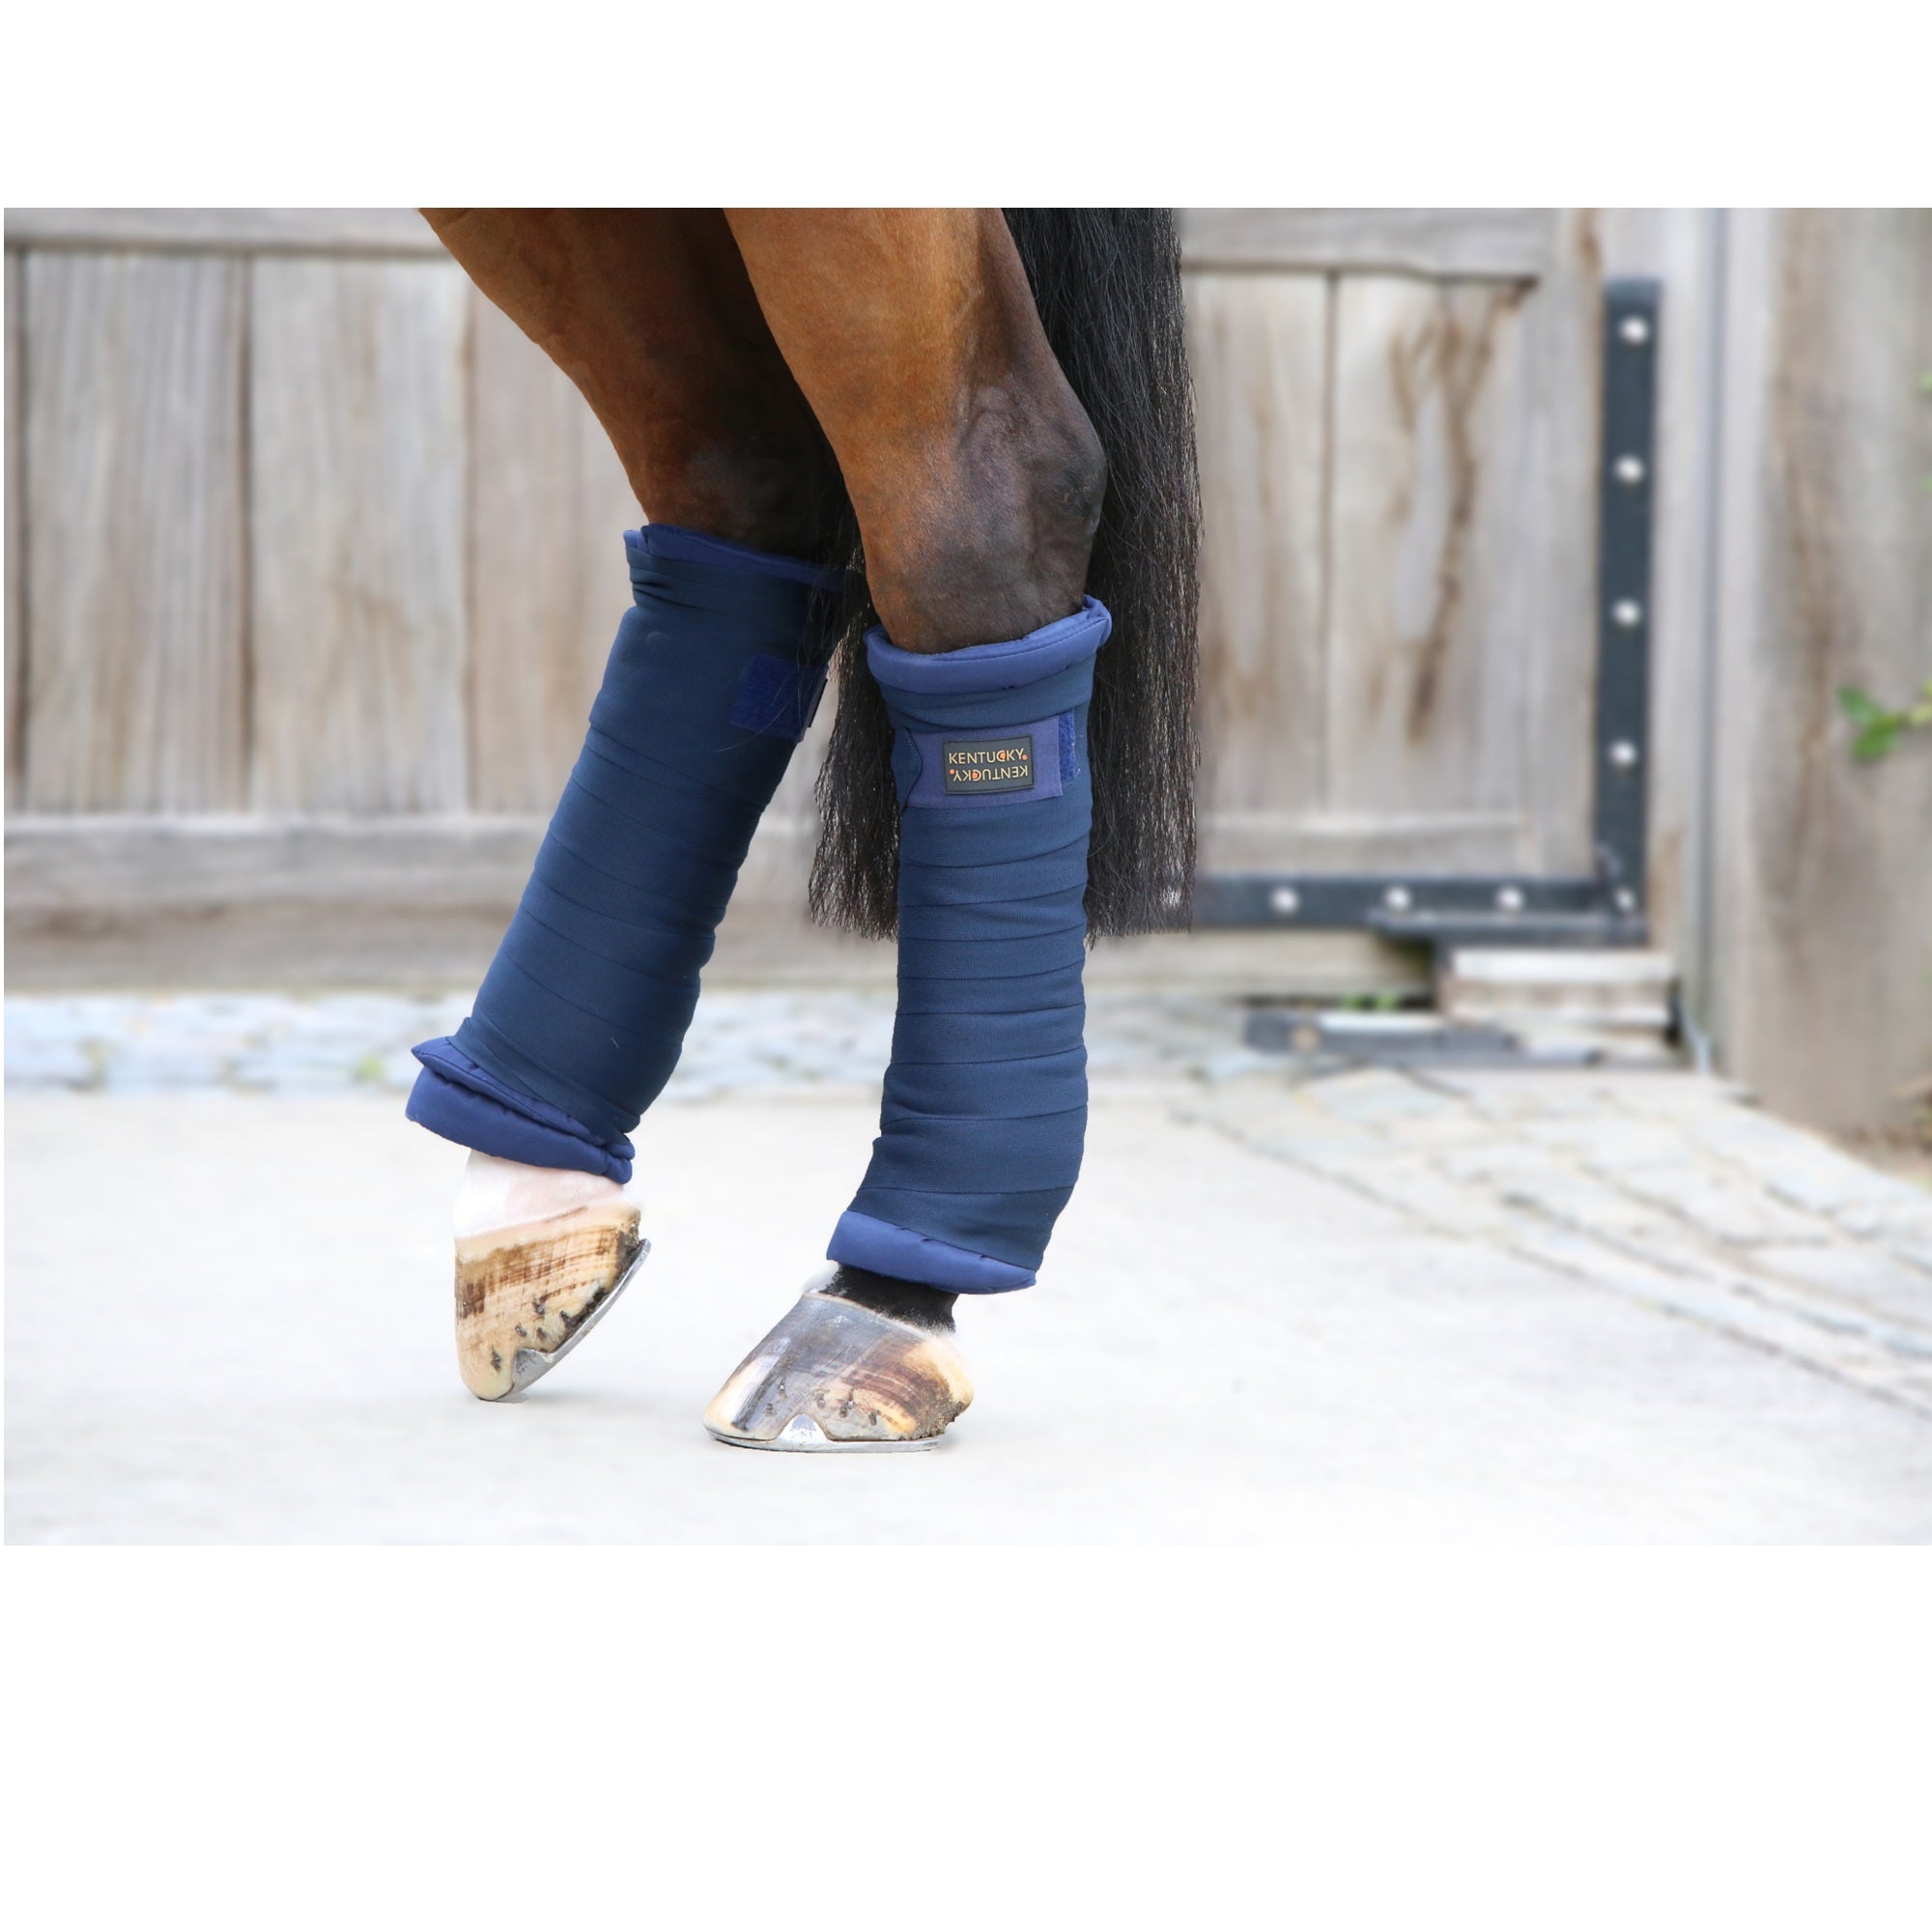 Kentucky Horsewear Stable Bandage Pads - Set of 4